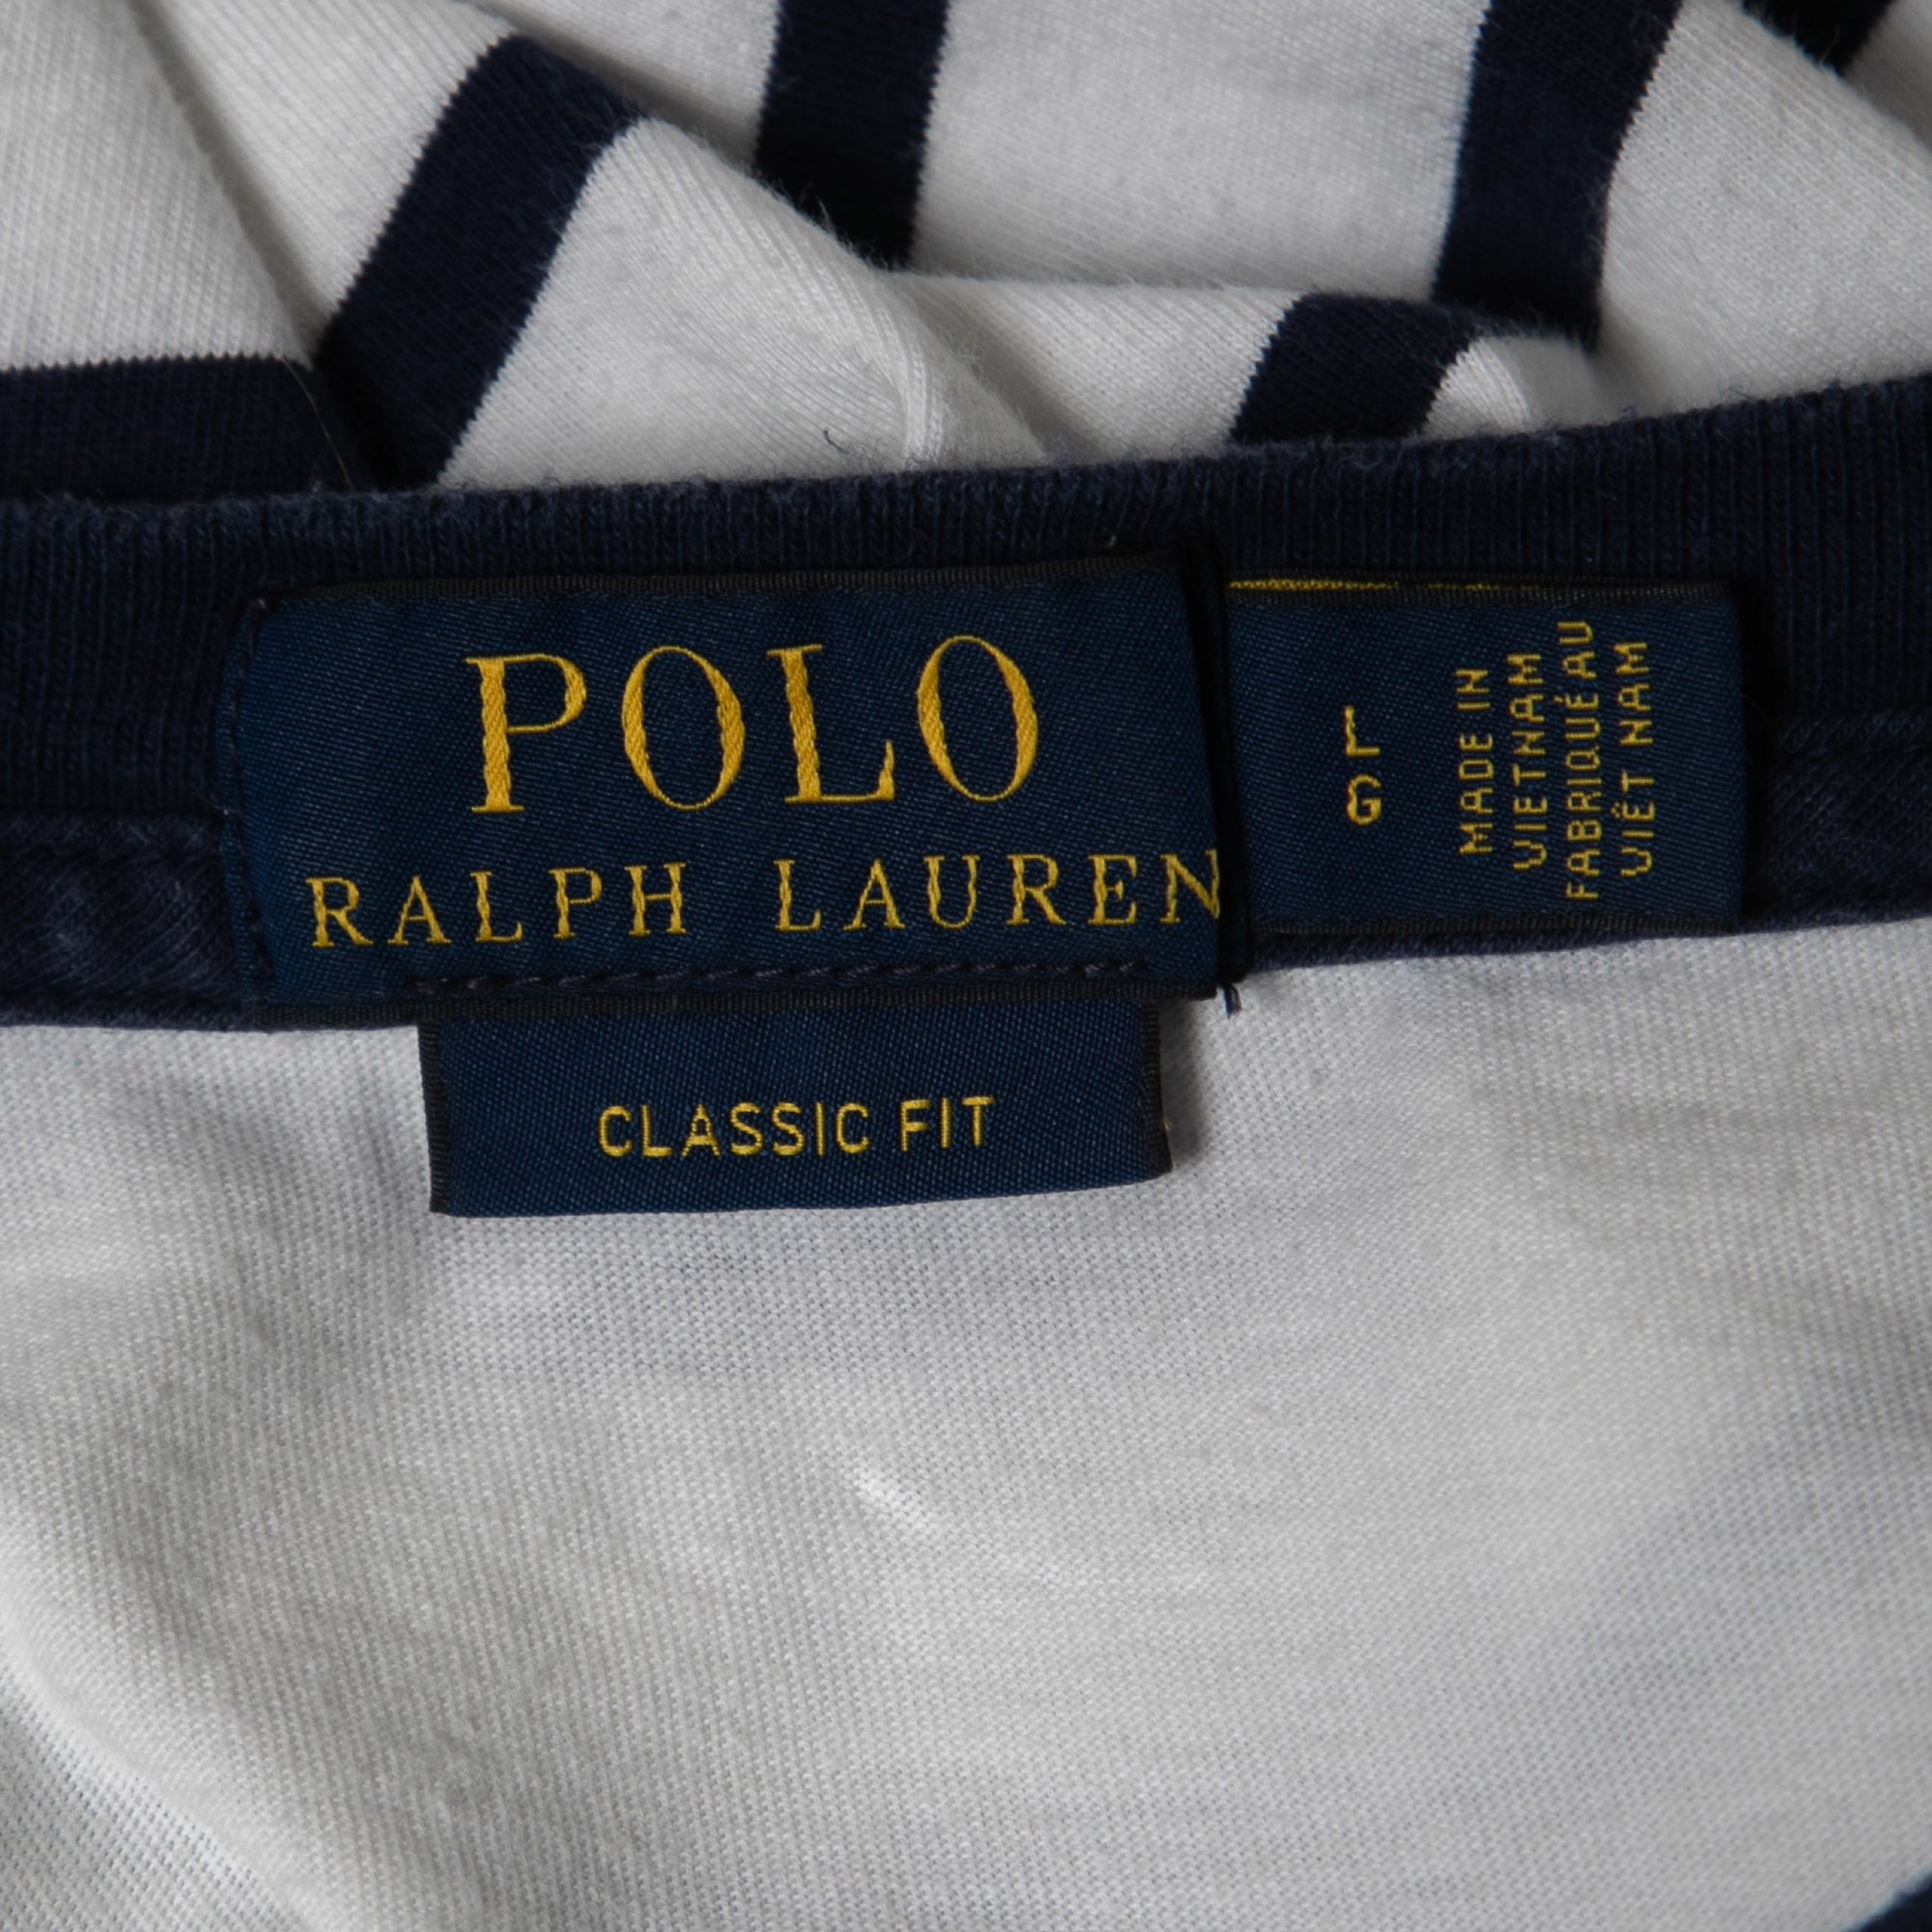 Polo Ralph Lauren White Striped Cotton Crew Neck Half Sleeve Classic Fit T-Shirt L